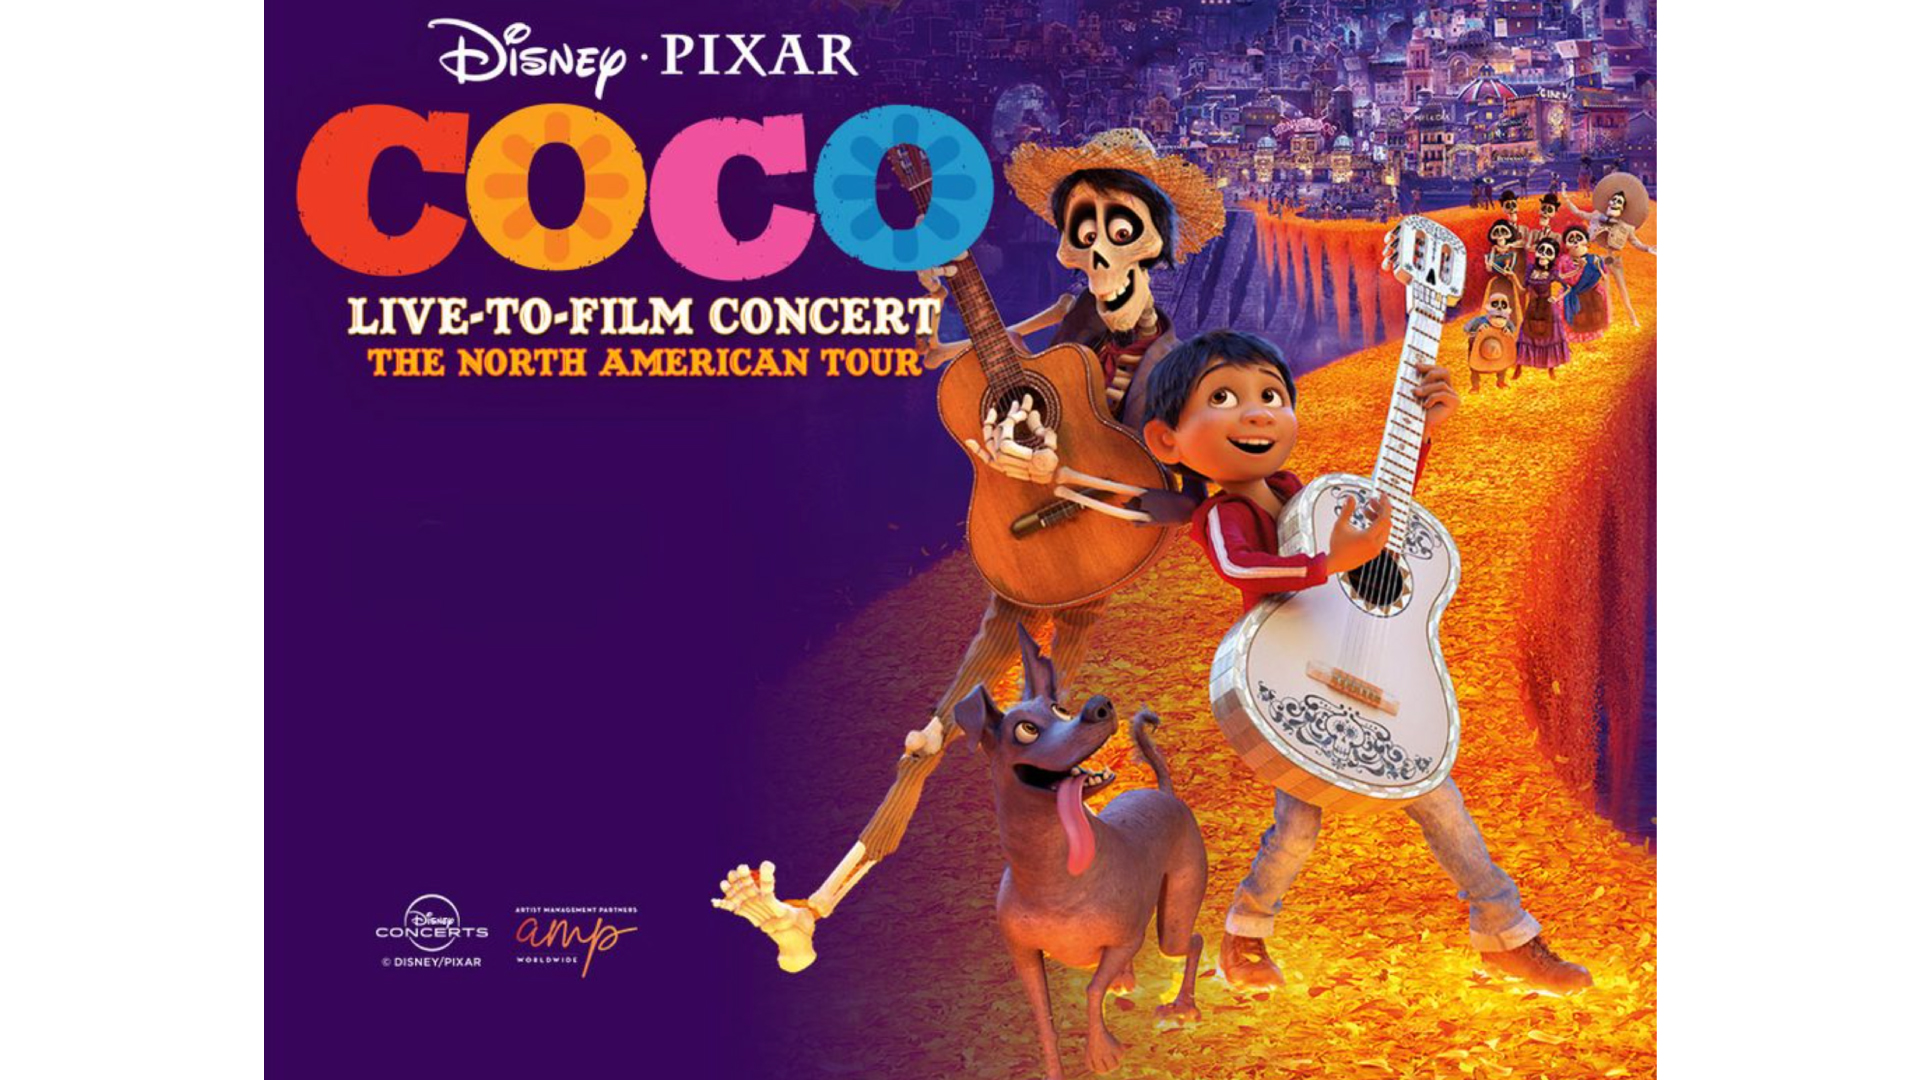 Disney and Pixar’s COCO Live-to-Film Concert